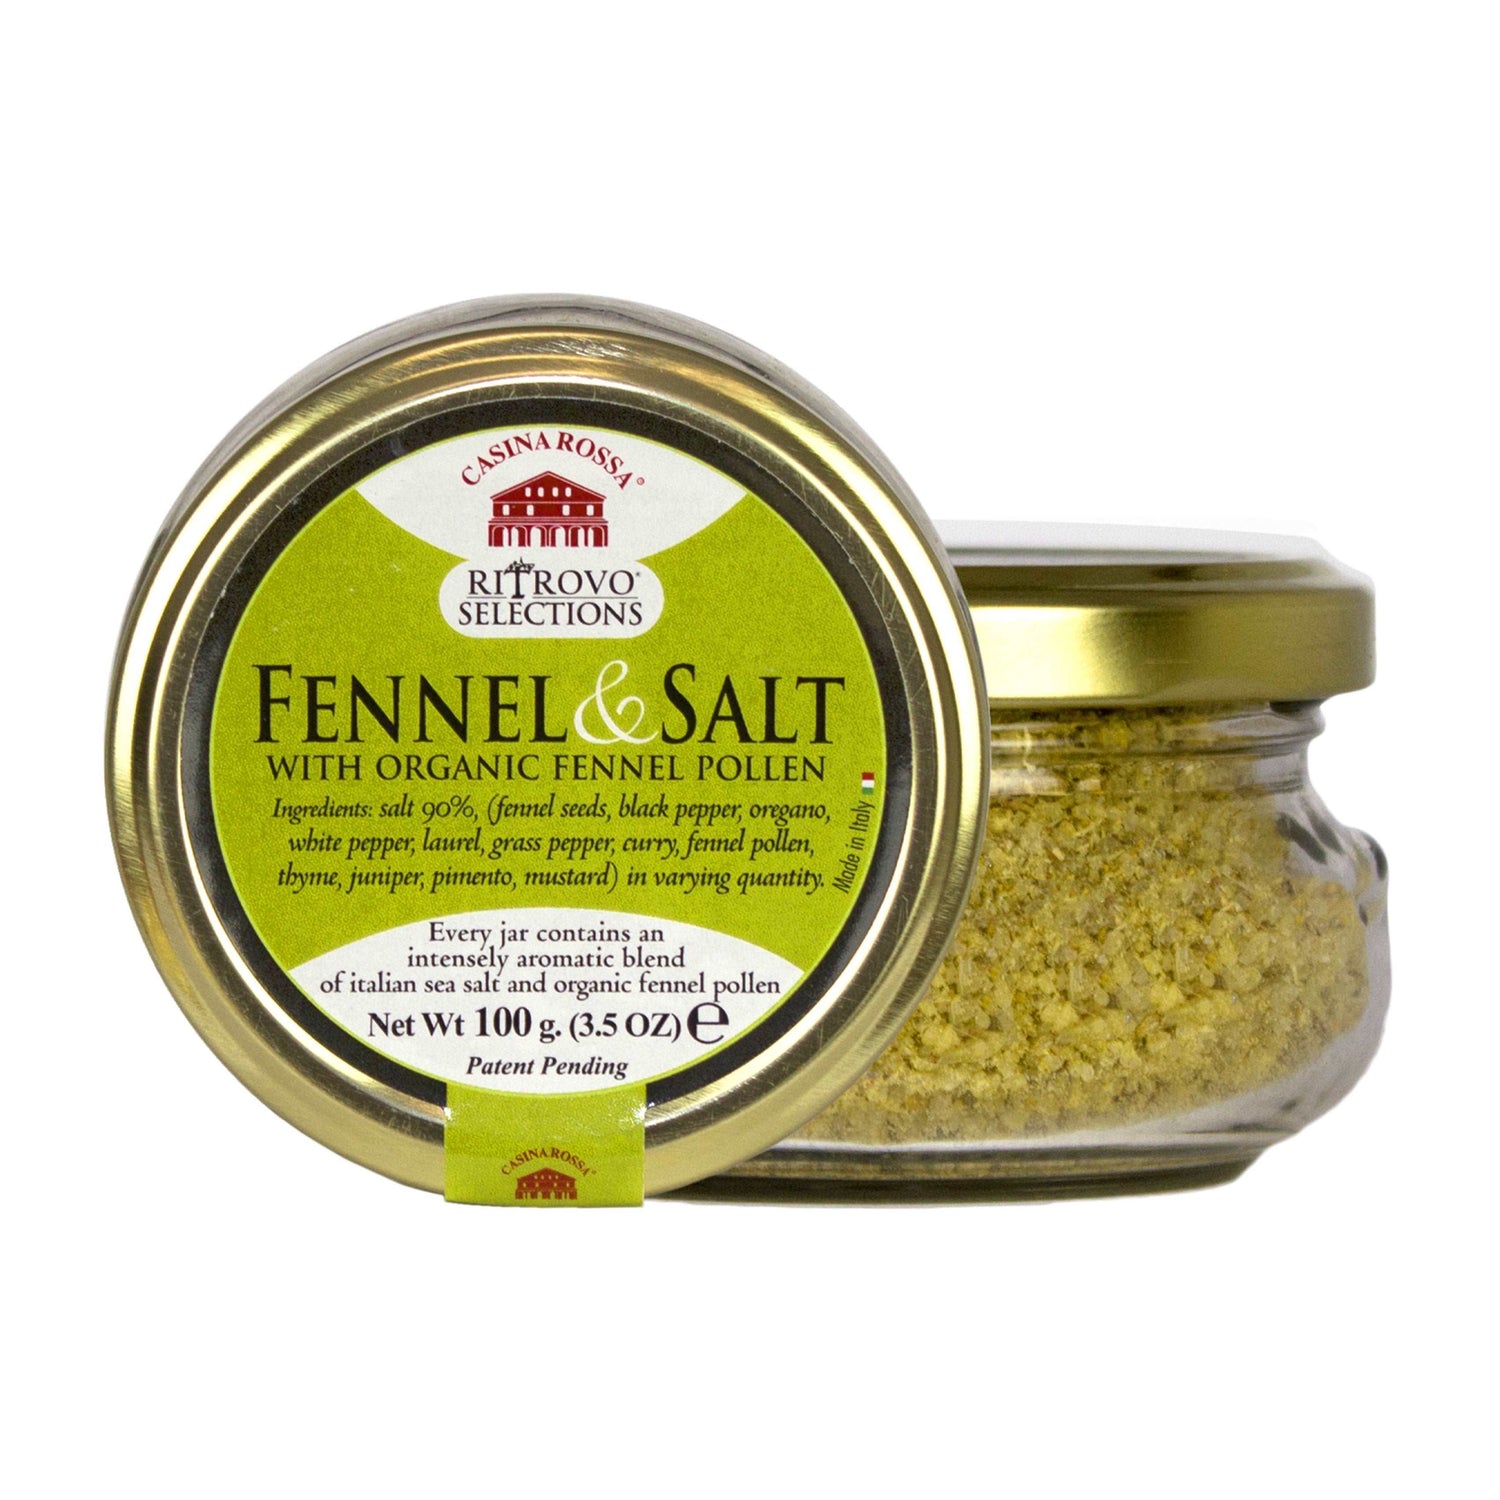 Casina Rossa Fennel & Salt